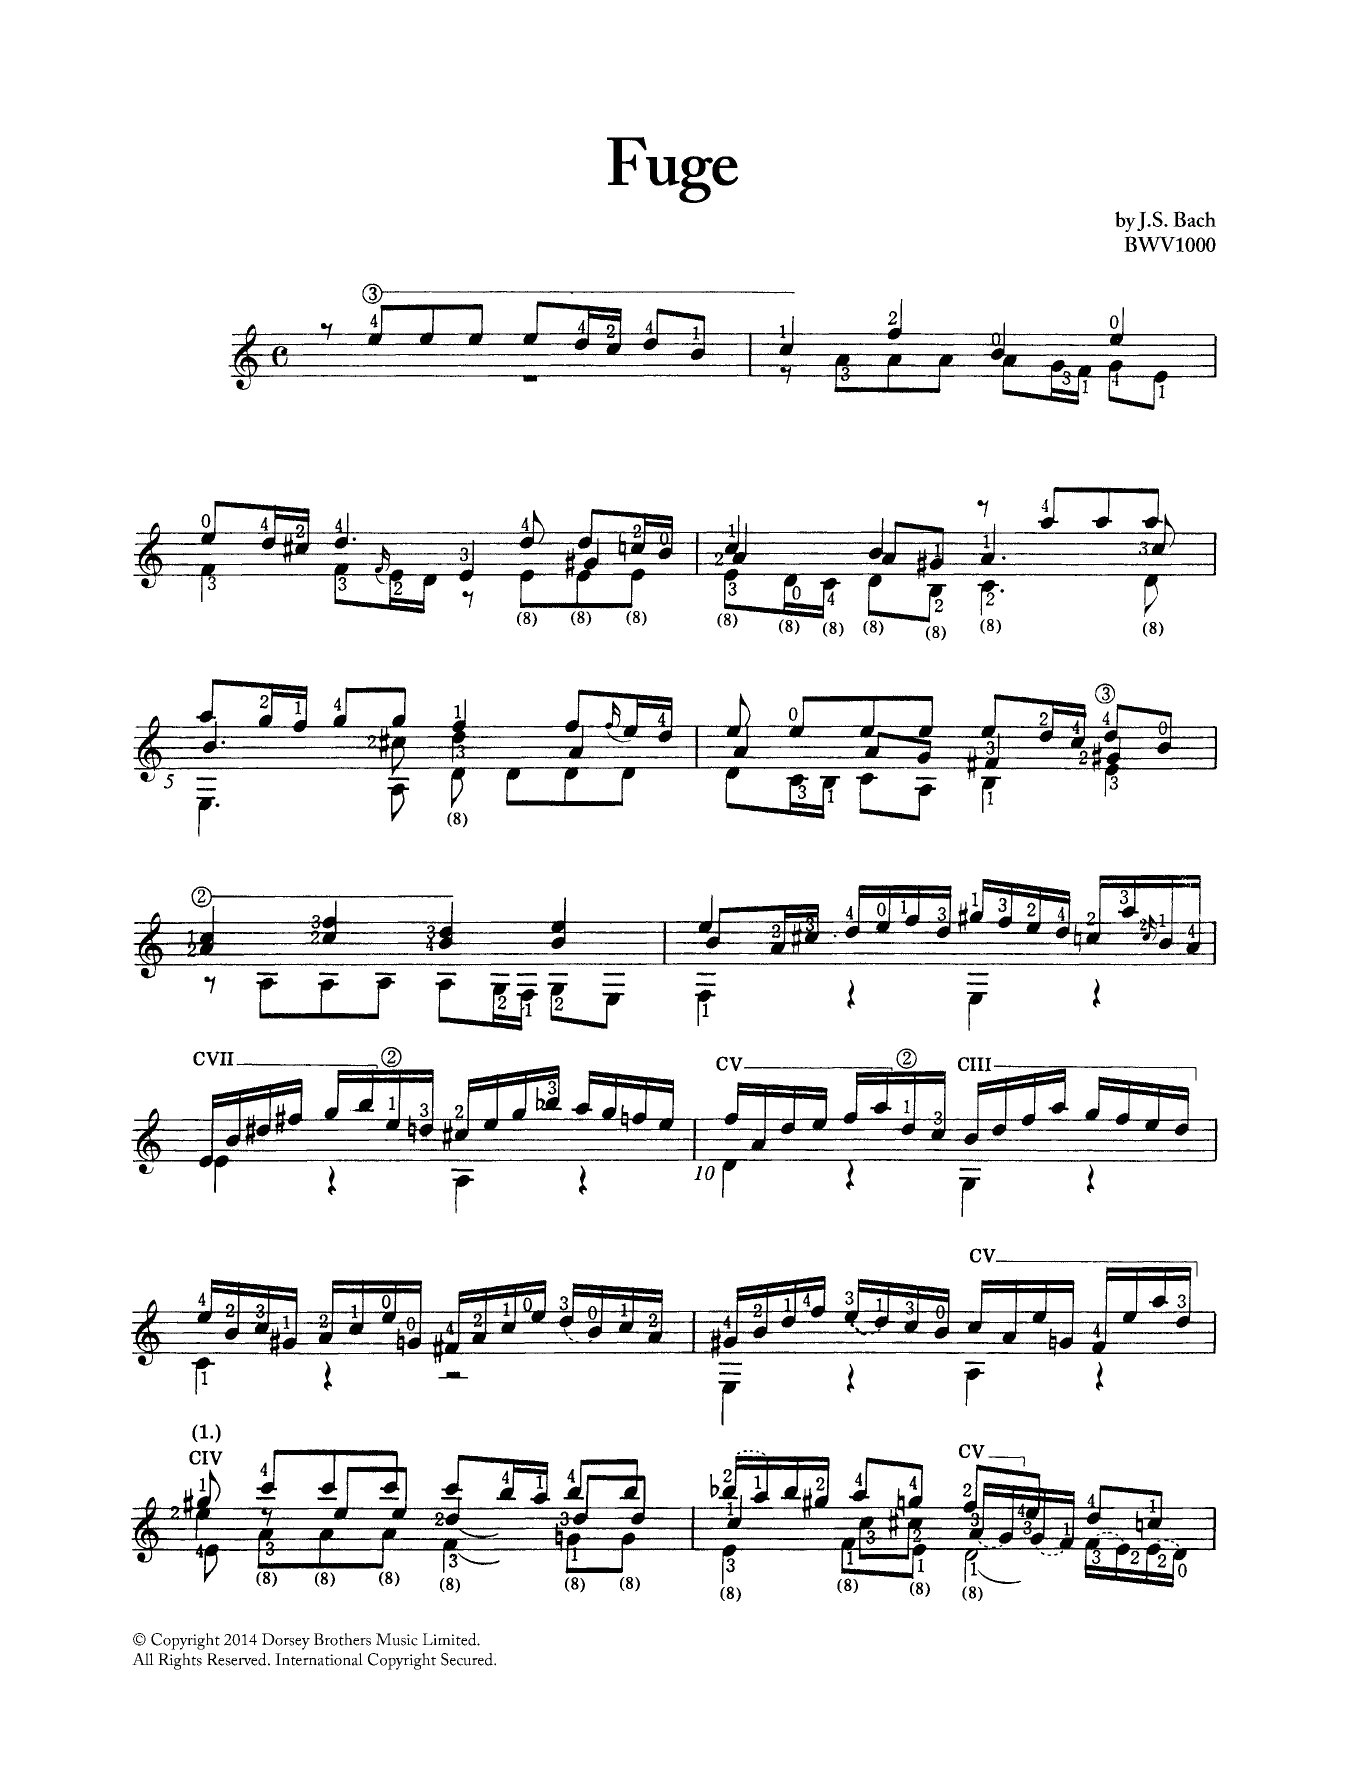 Download Johann Sebastian Bach Fugue In A Minor BWV 1000 Sheet Music